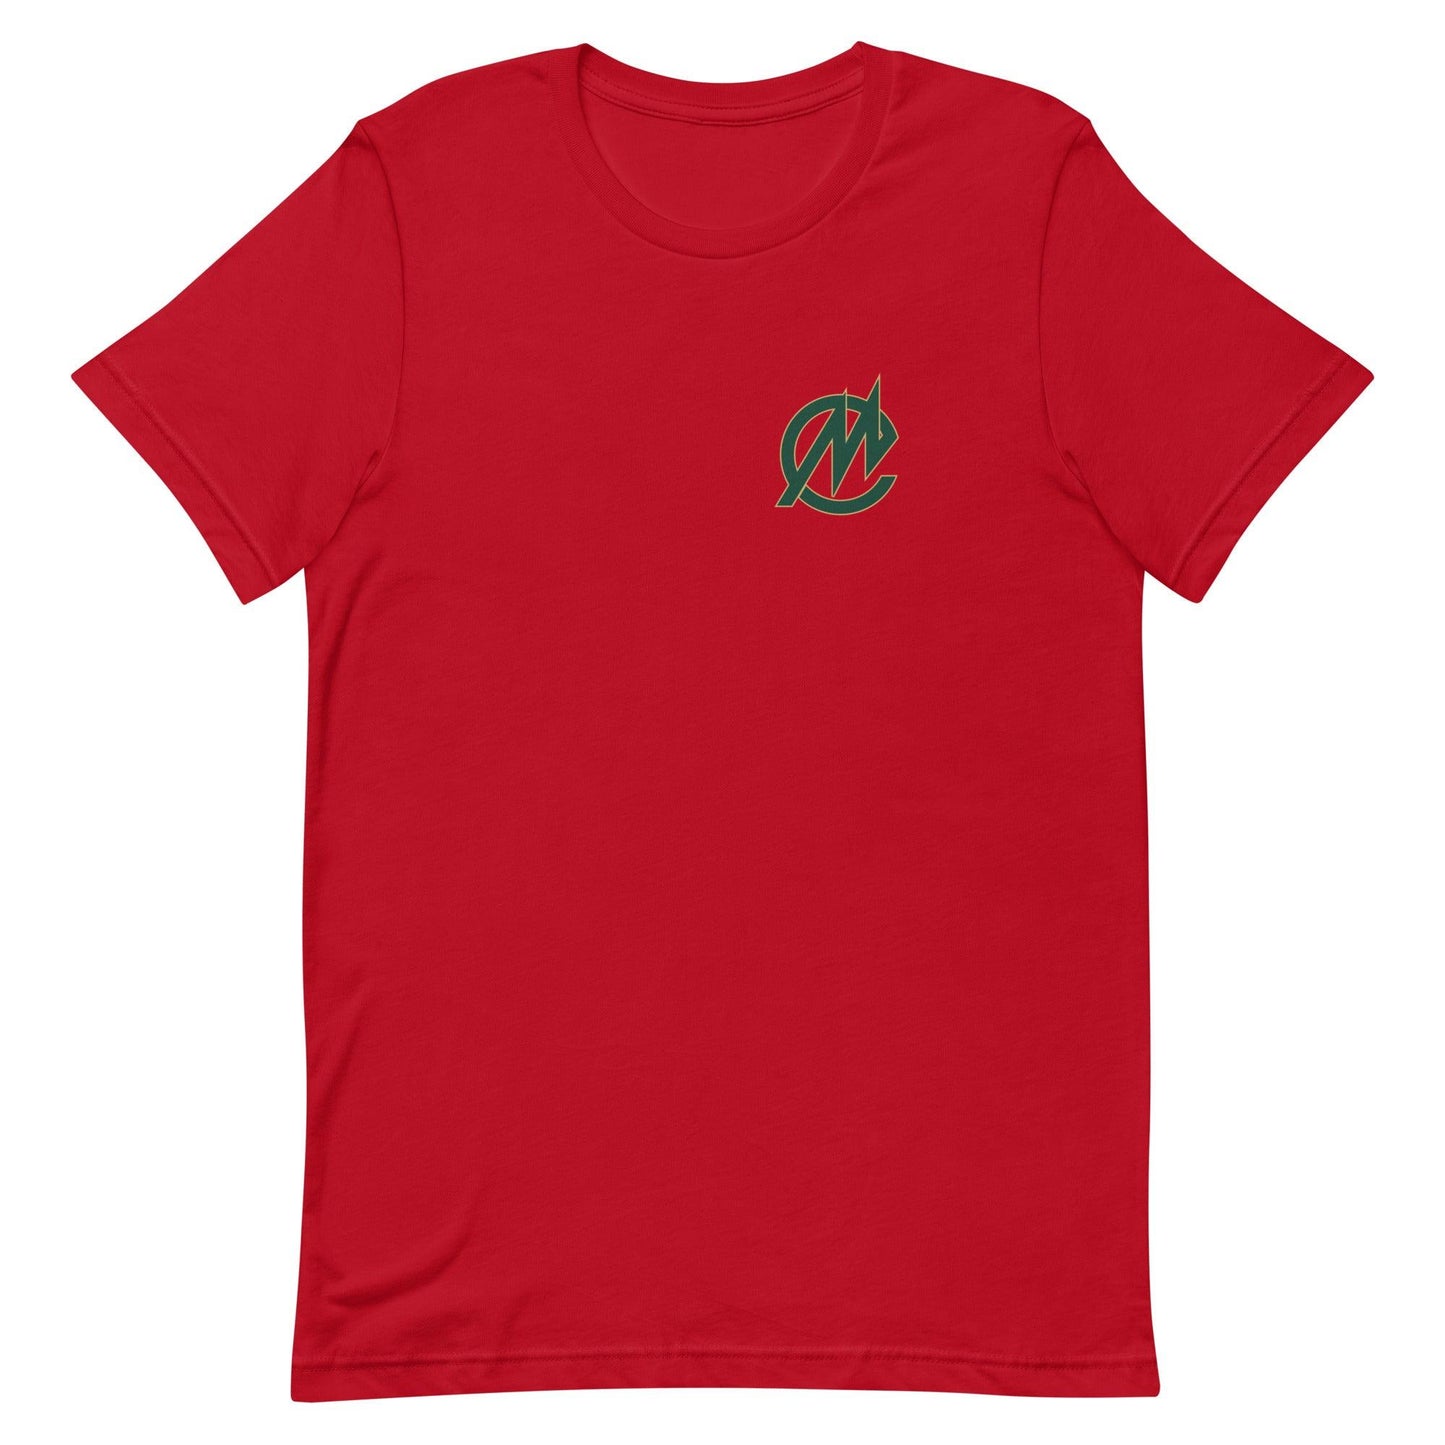 Chase Monroe "Essential" t-shirt - Fan Arch